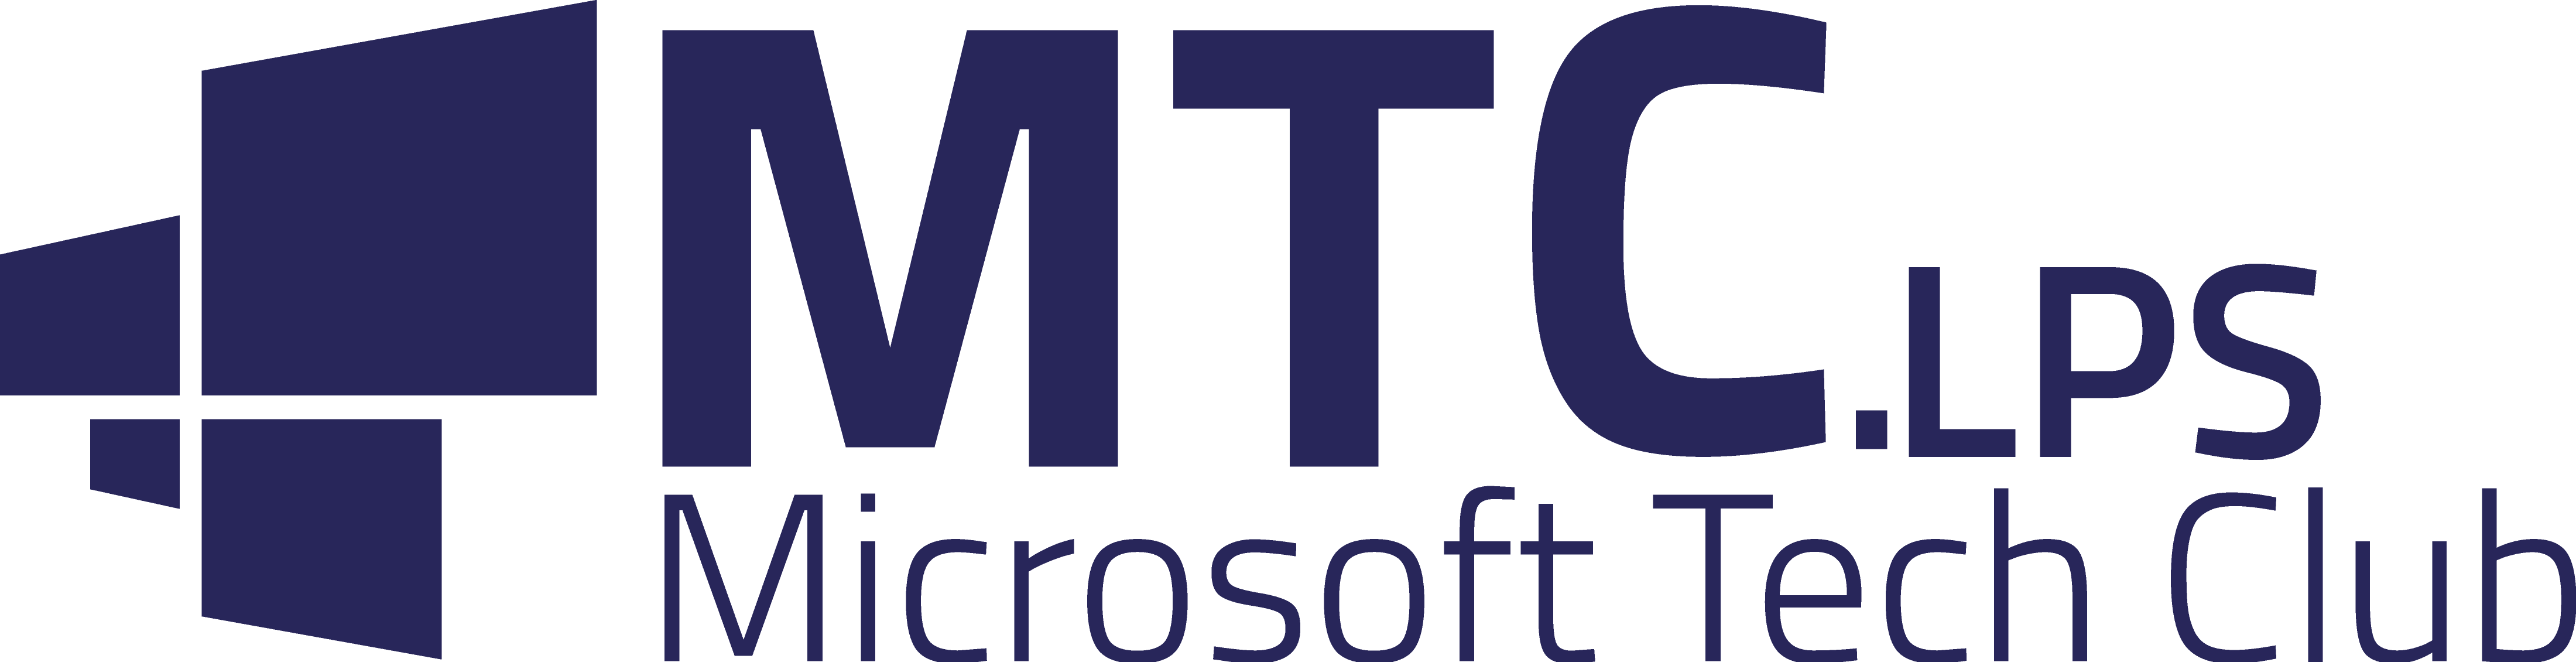 Microsoft Tech Logo - MTC LPS Tech Club Main page